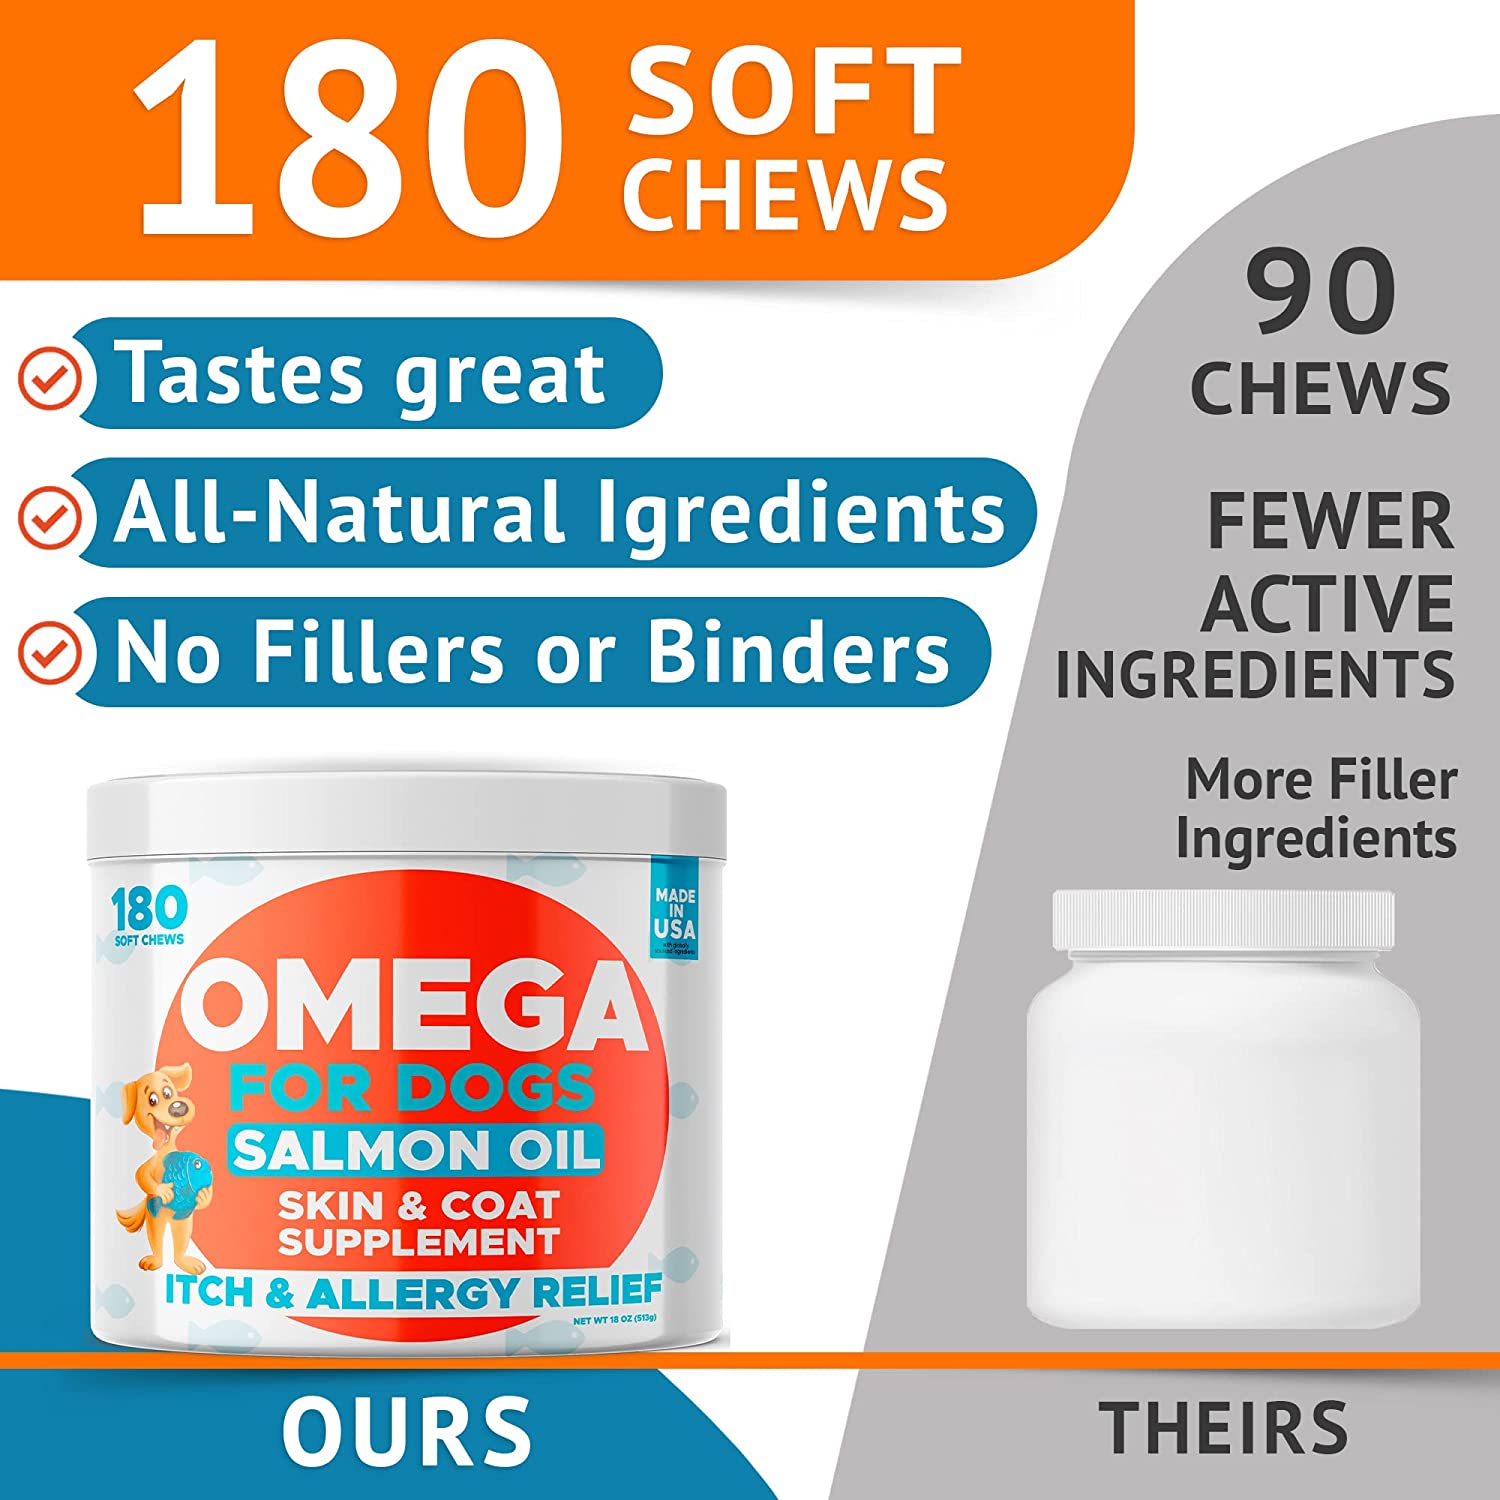 Omega 3 Alaskan Fish Oil Treats